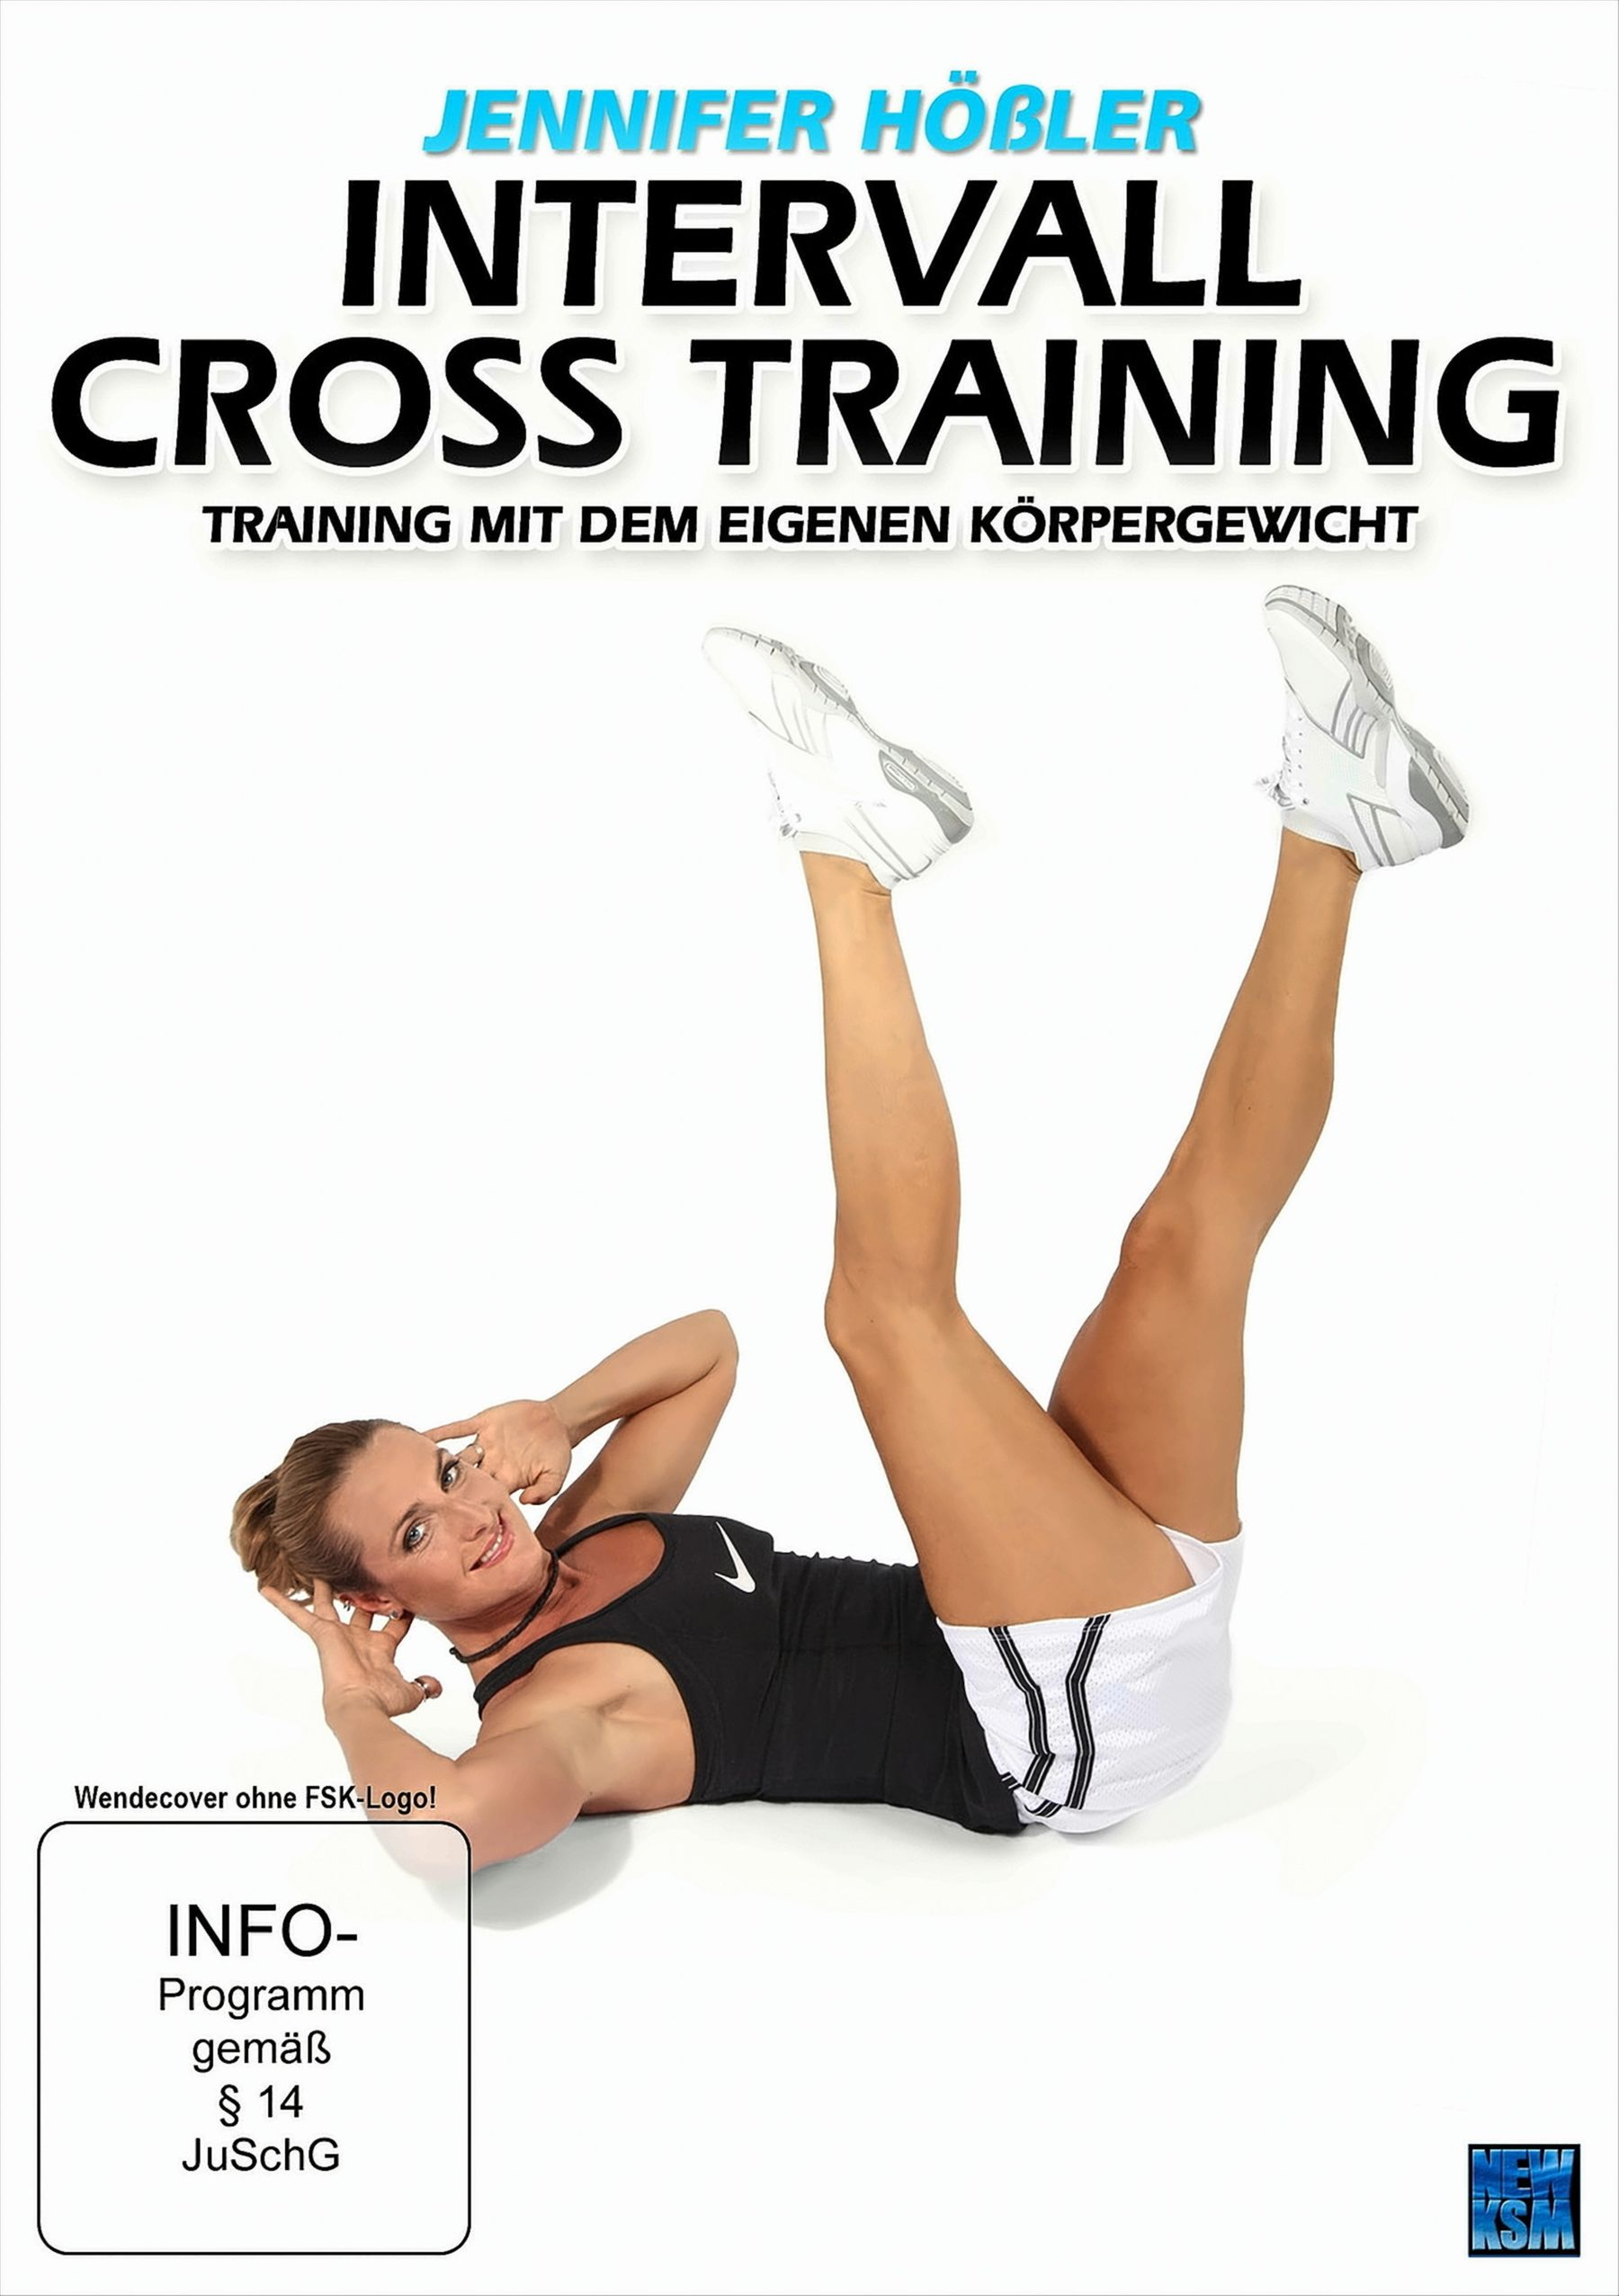 Jennifer Hößler Körpergewicht Intervall Cross DVD mit eigenen Training Training: - dem